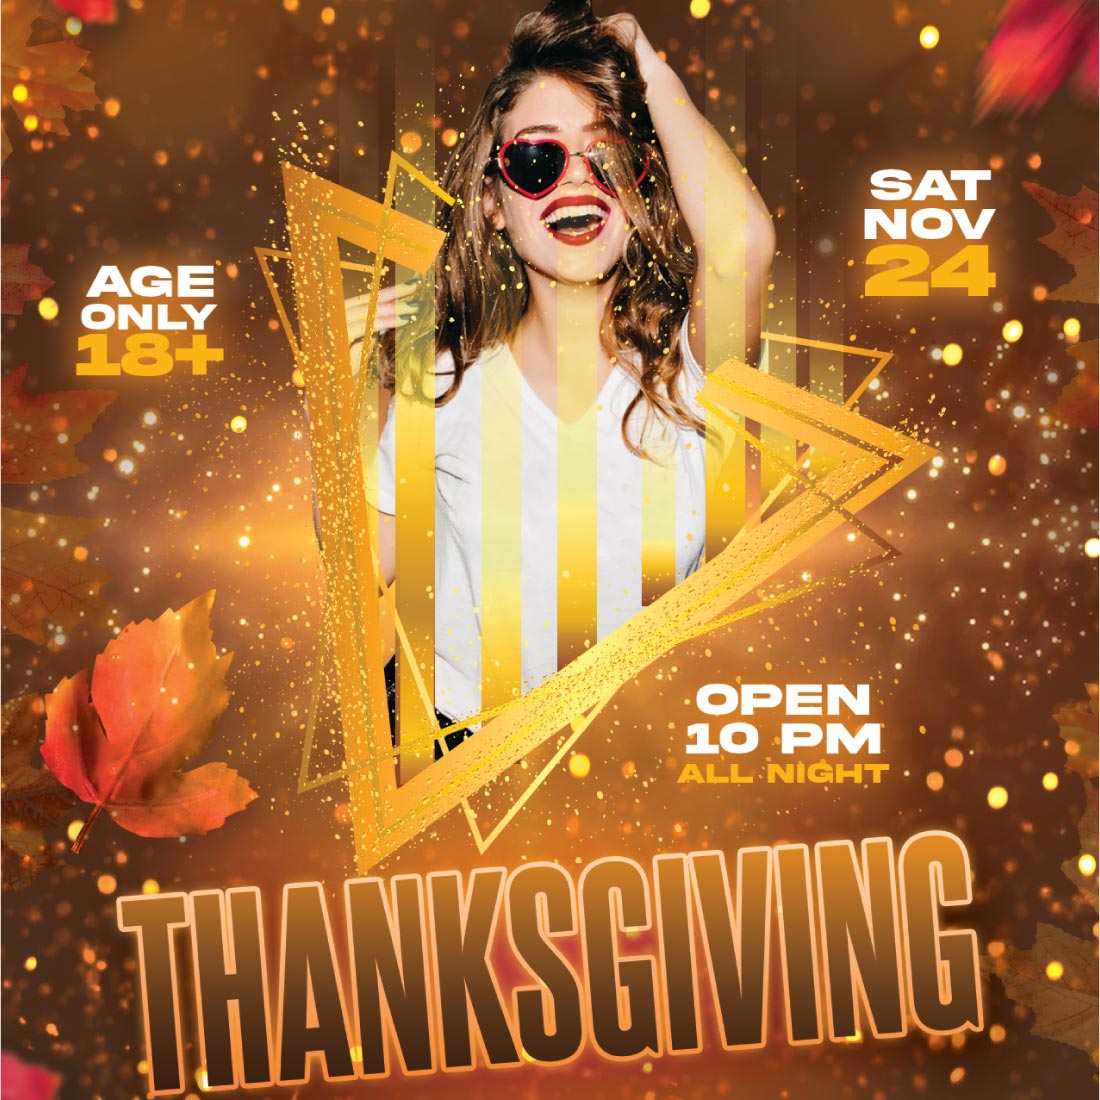 Thanksgiving Flyer Design cover image.